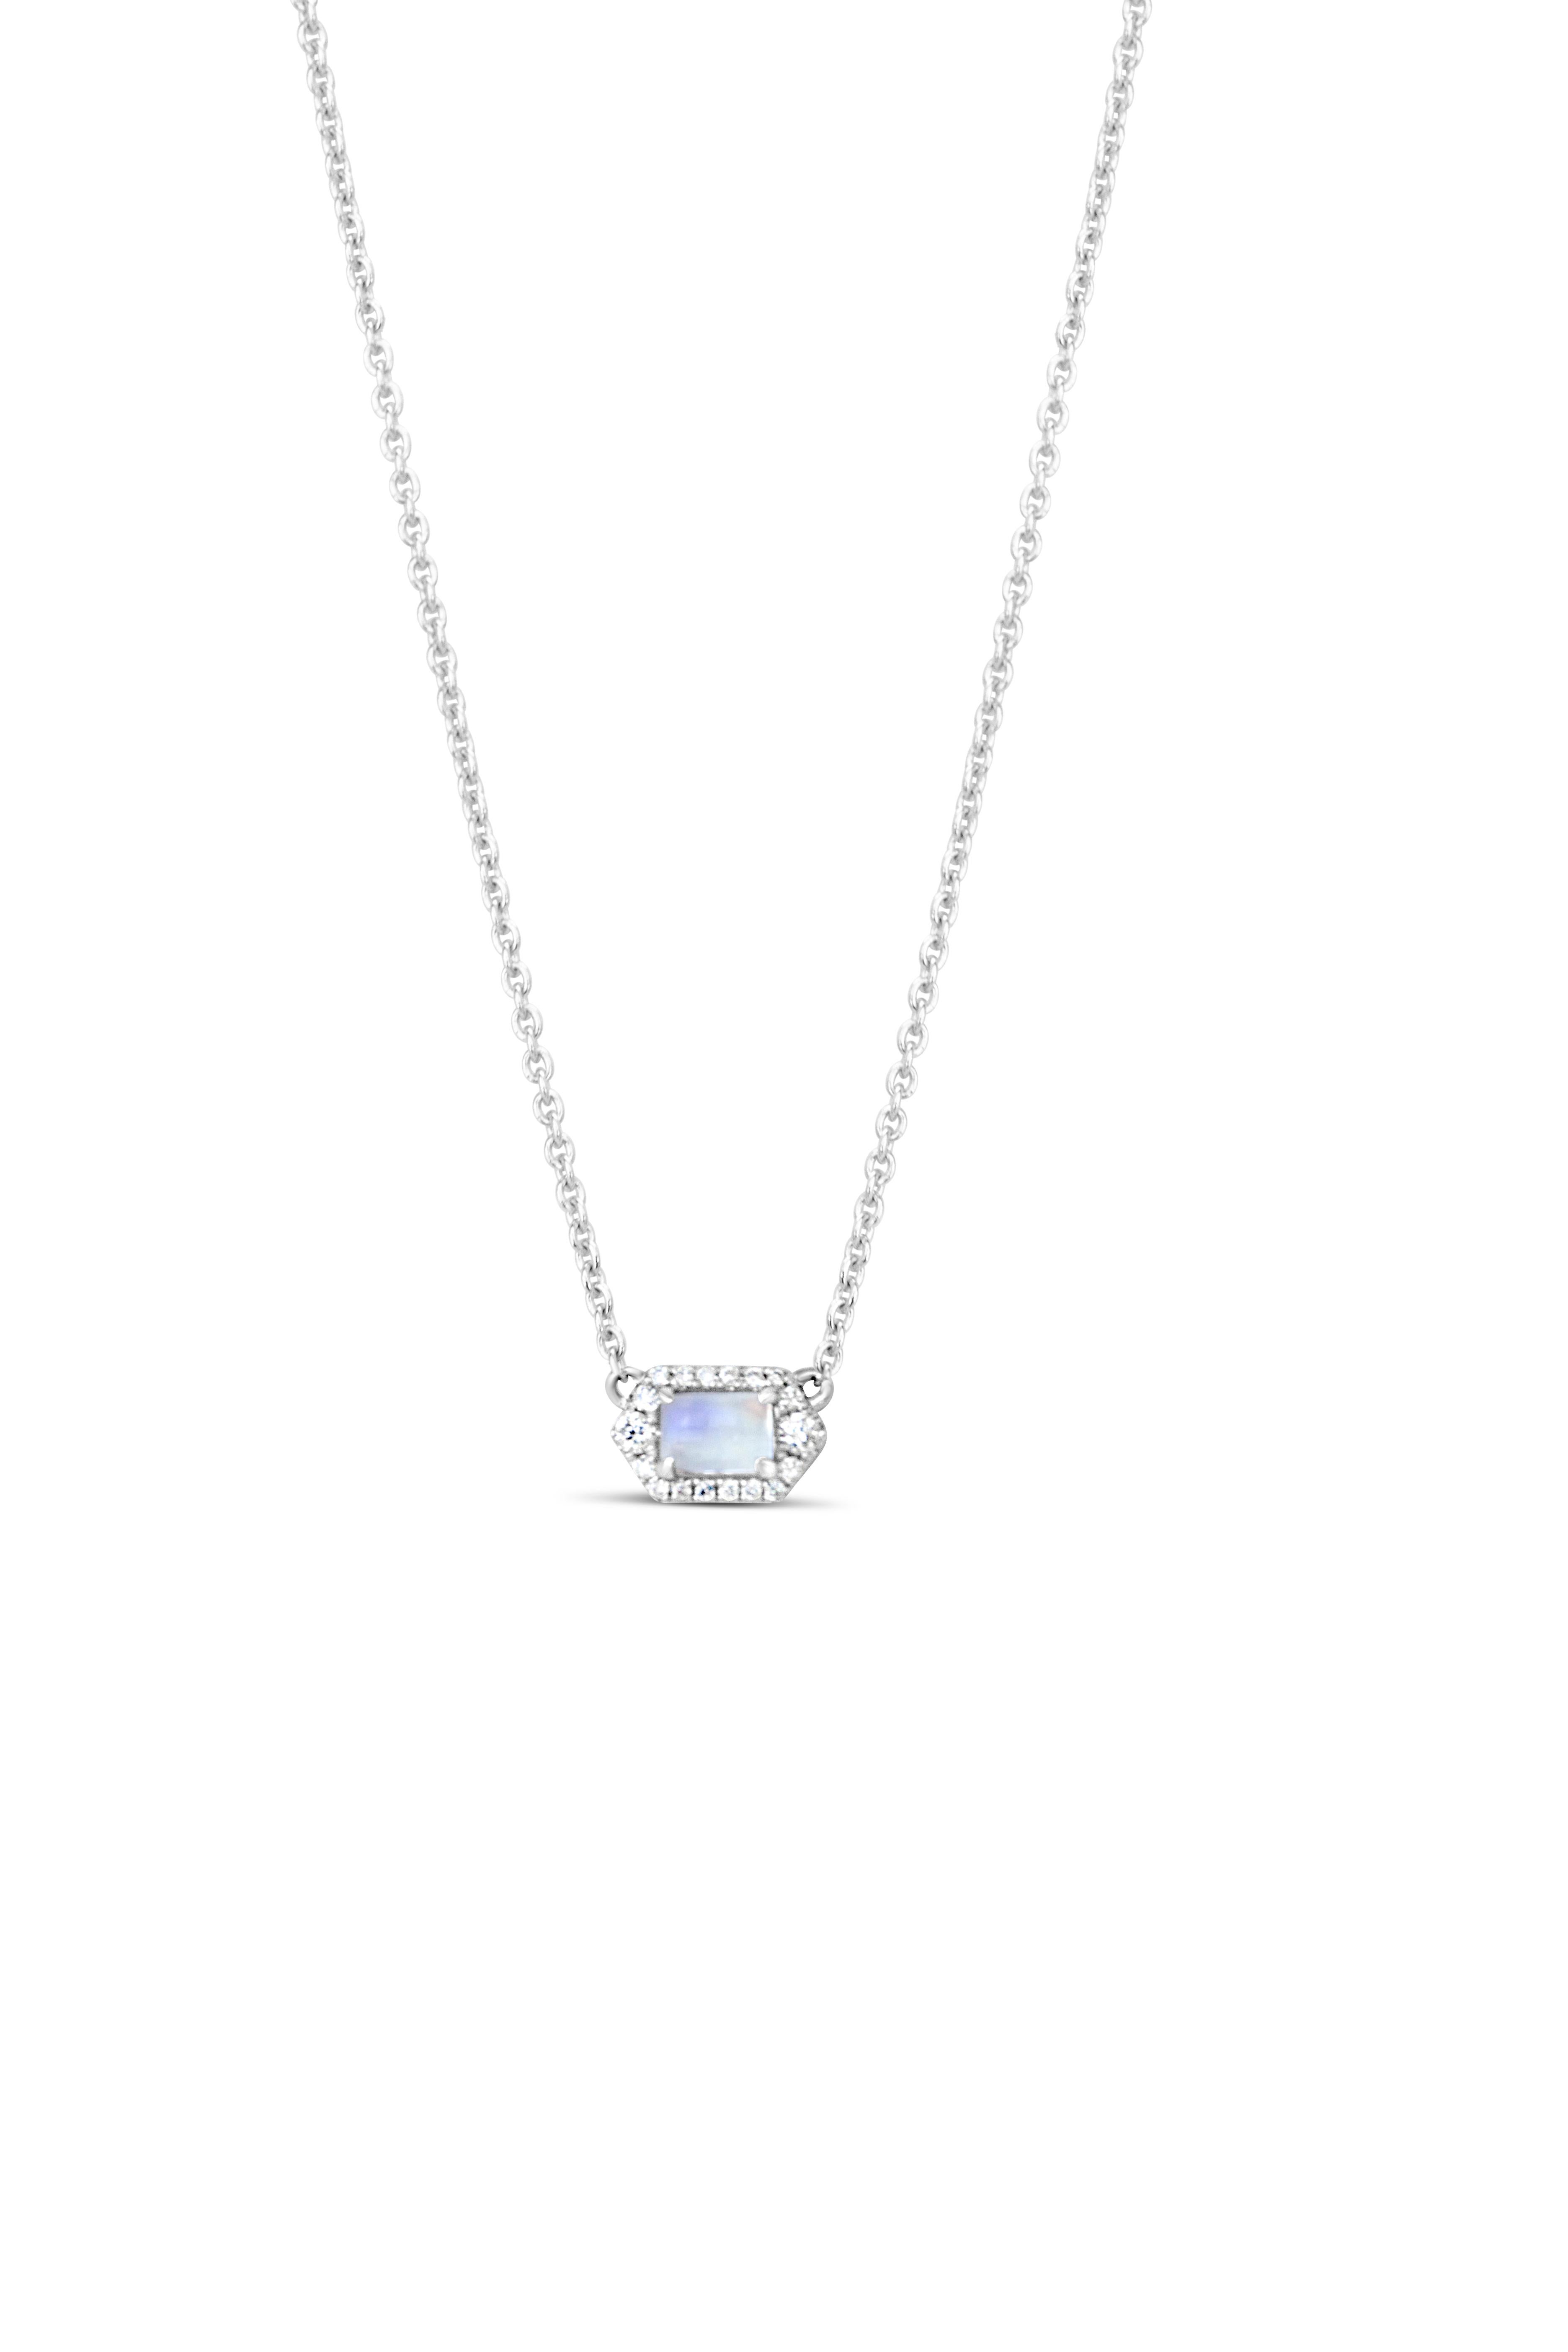 Petite moonstone and diamond hexagon pendant neckalce in 14k white gold with chain.